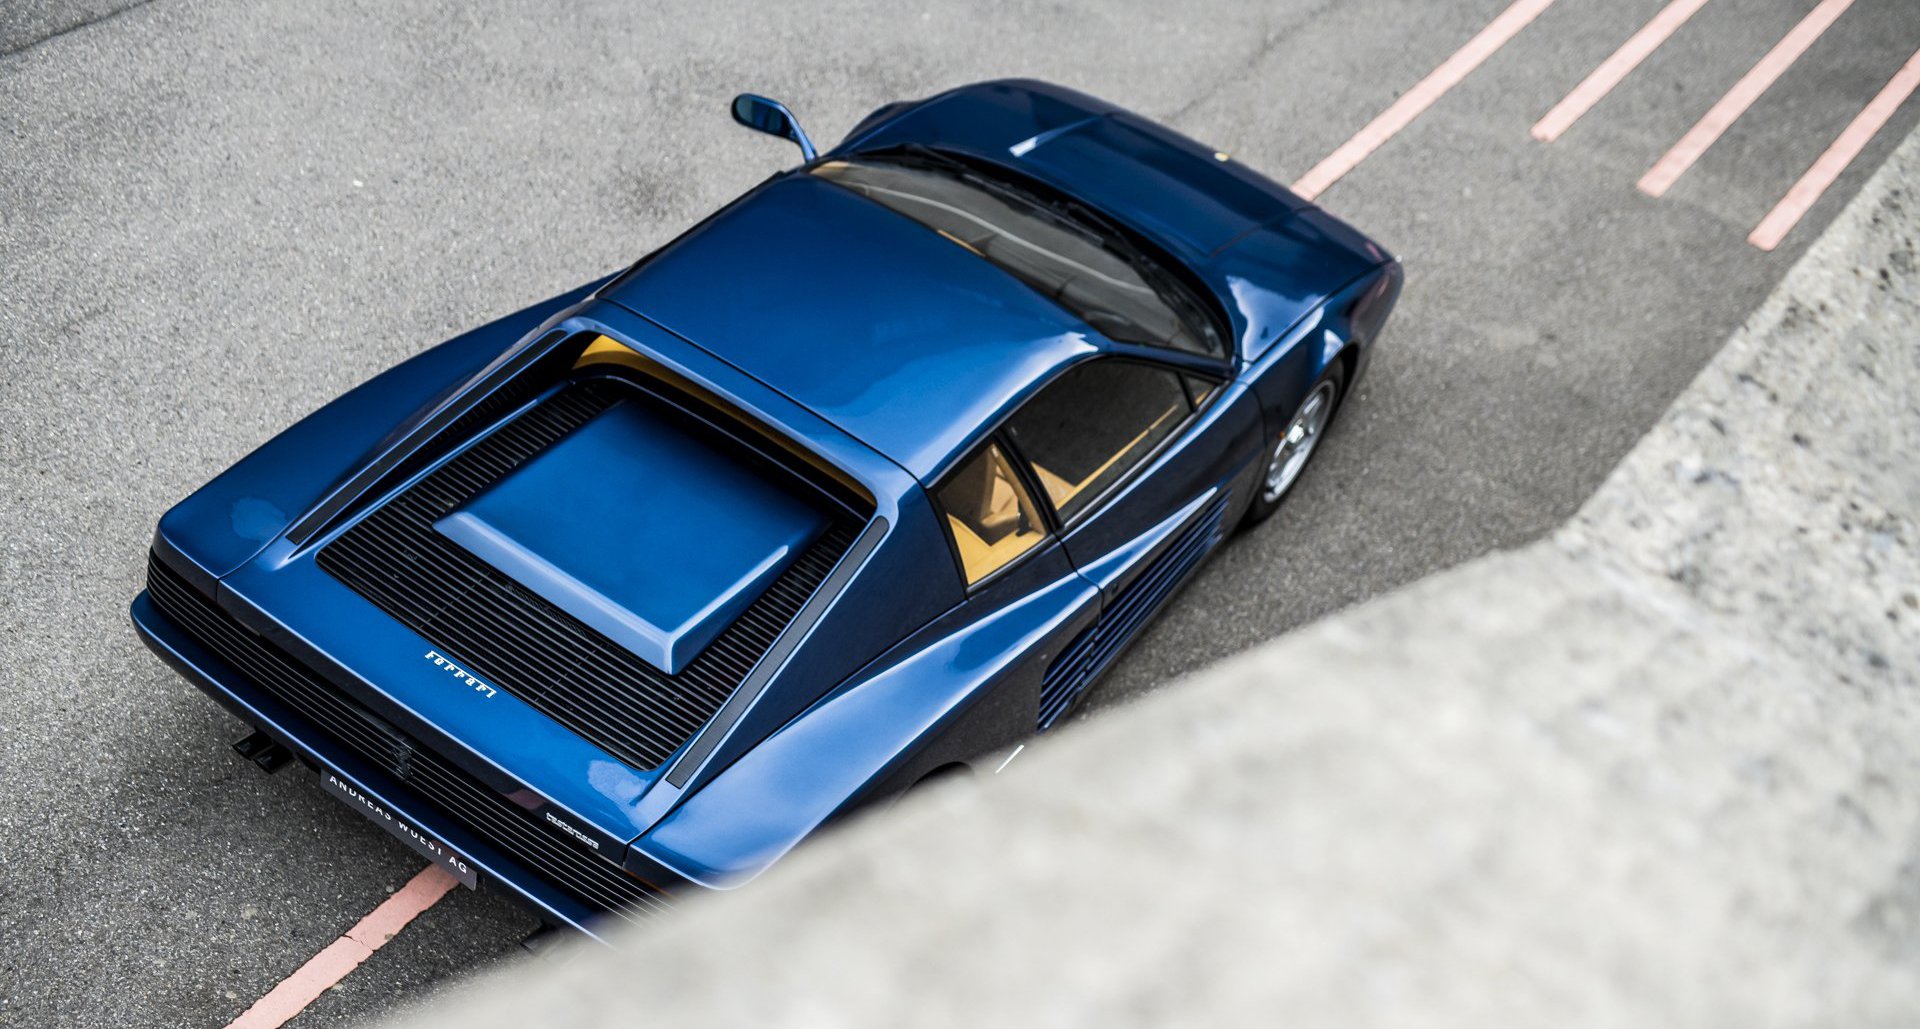 Why the most flamboyant Ferrari Testarossa is a blue 'Monospecchio'